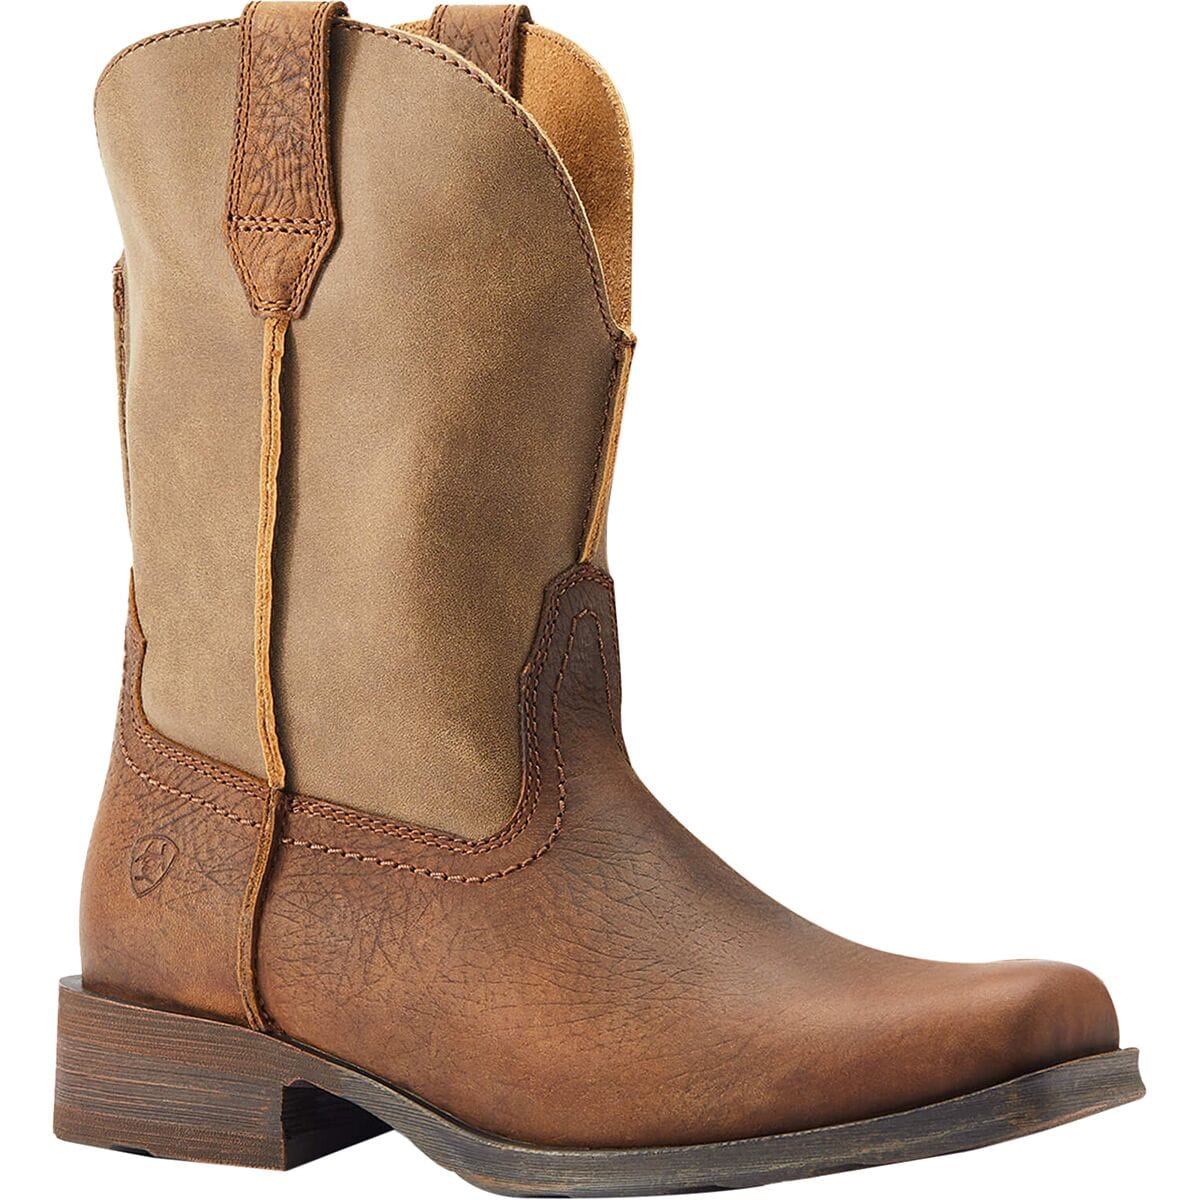 Ariat Rambler Western Boot - Women's